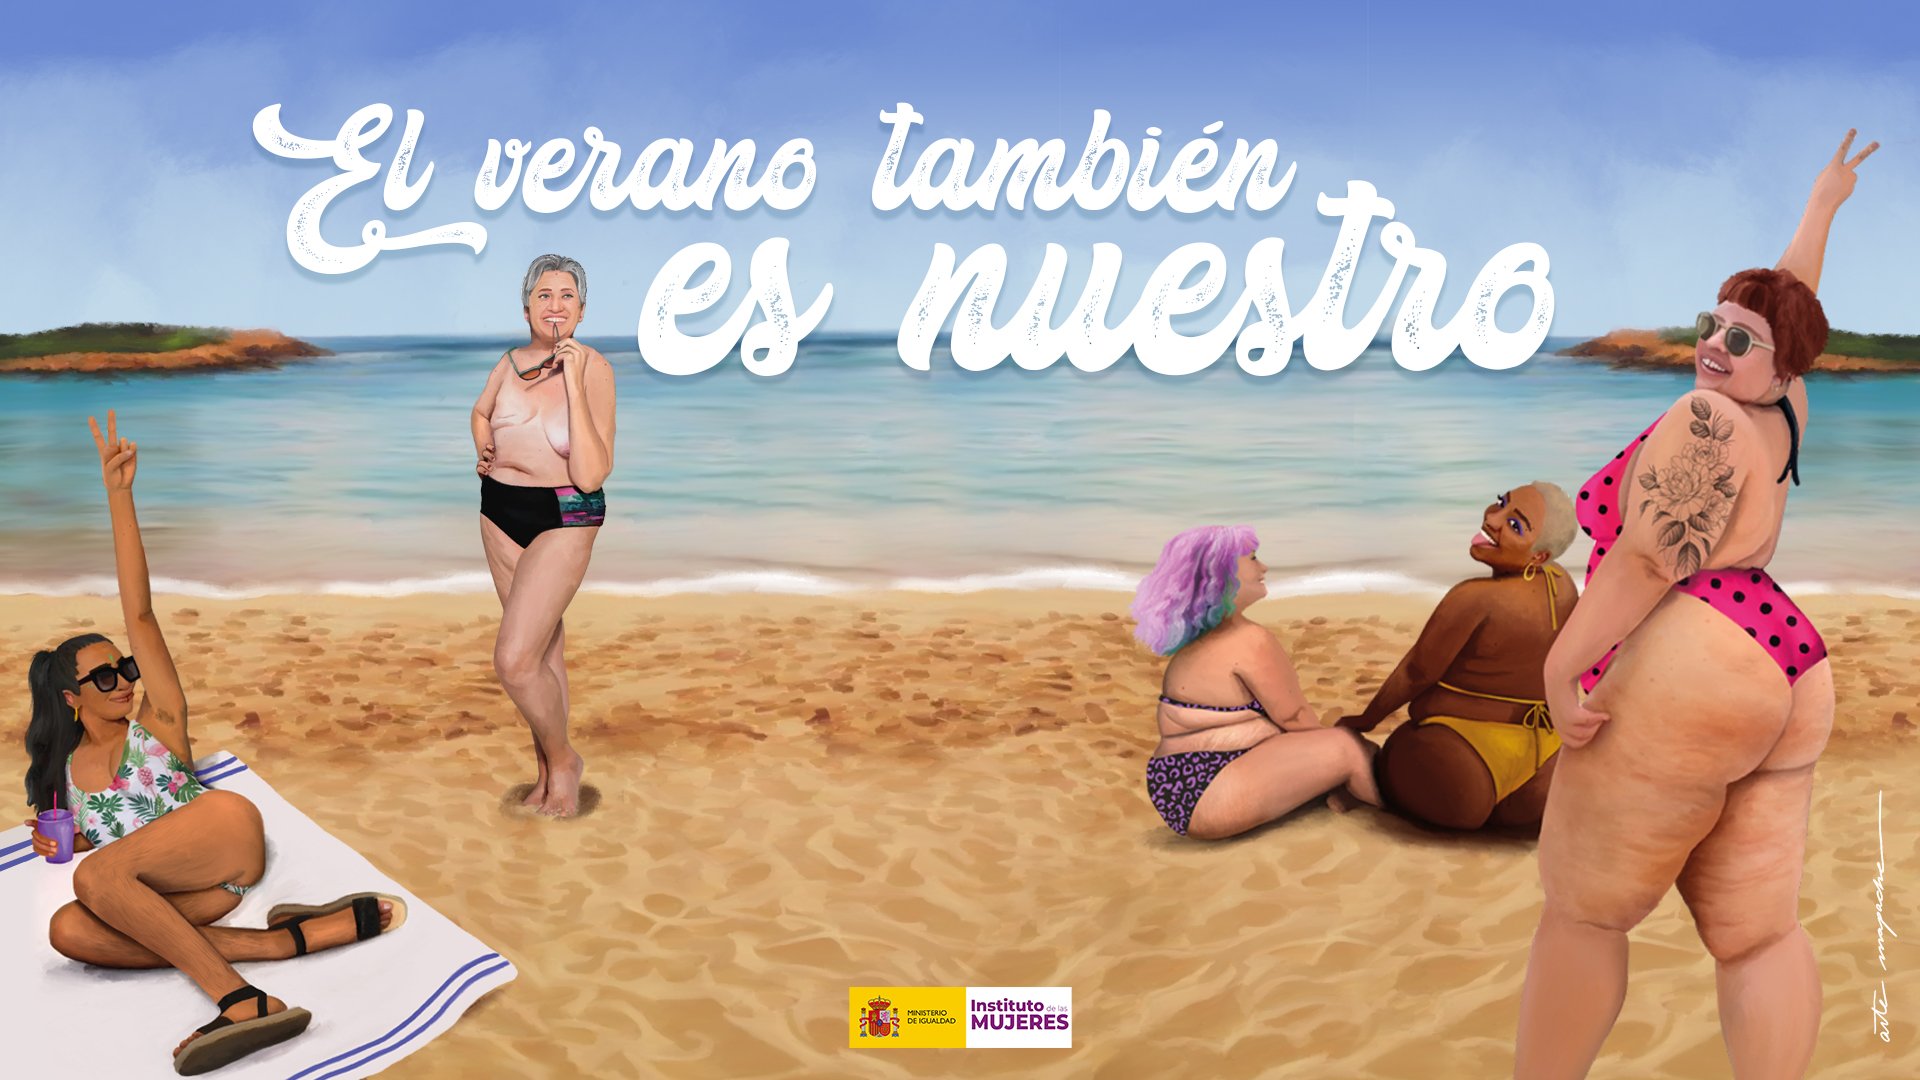 spanyolorszag-plakat-bikinitest